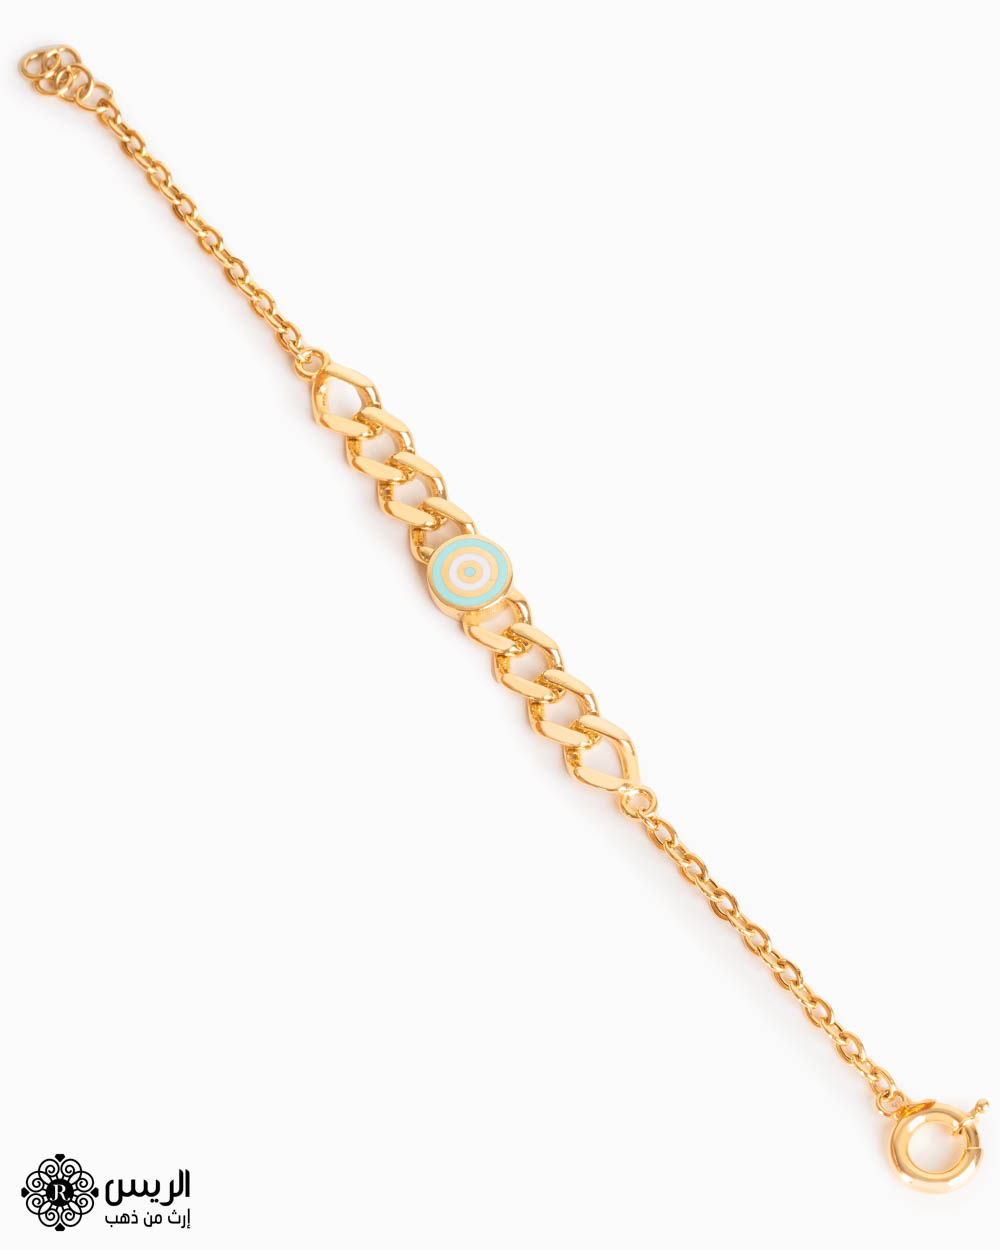 Raies jewelry Bracelet Chain Design إسورة (إنسيالة) جنزير الريس للمجوهرات